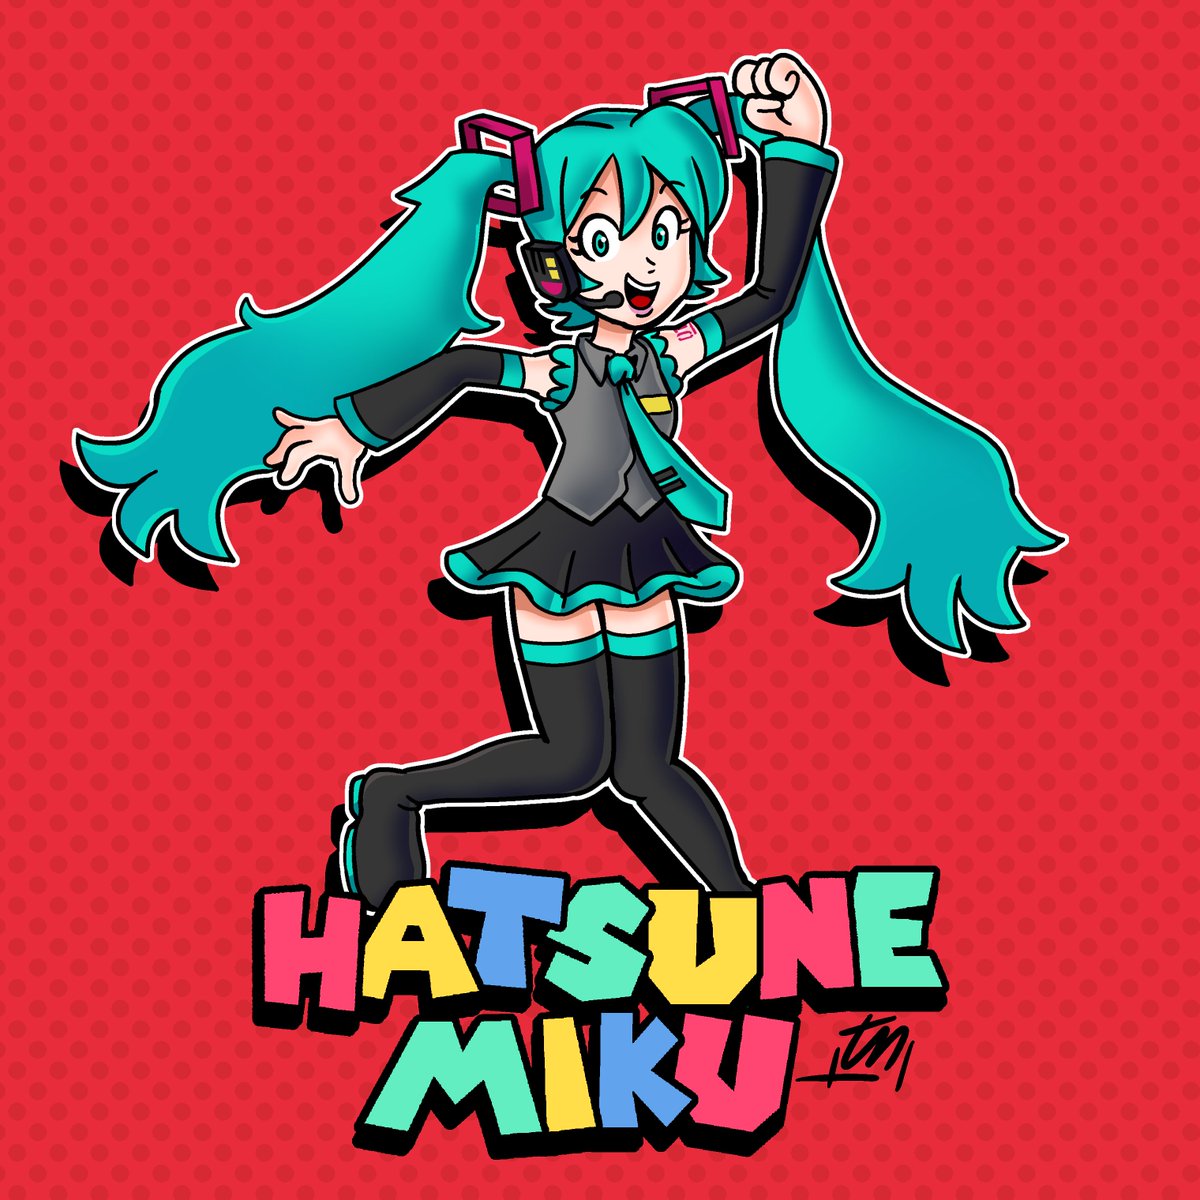 OMG LOOK at these cute Hatsuni Miku-chan mashups! such a creative idea! Credit: the original artists